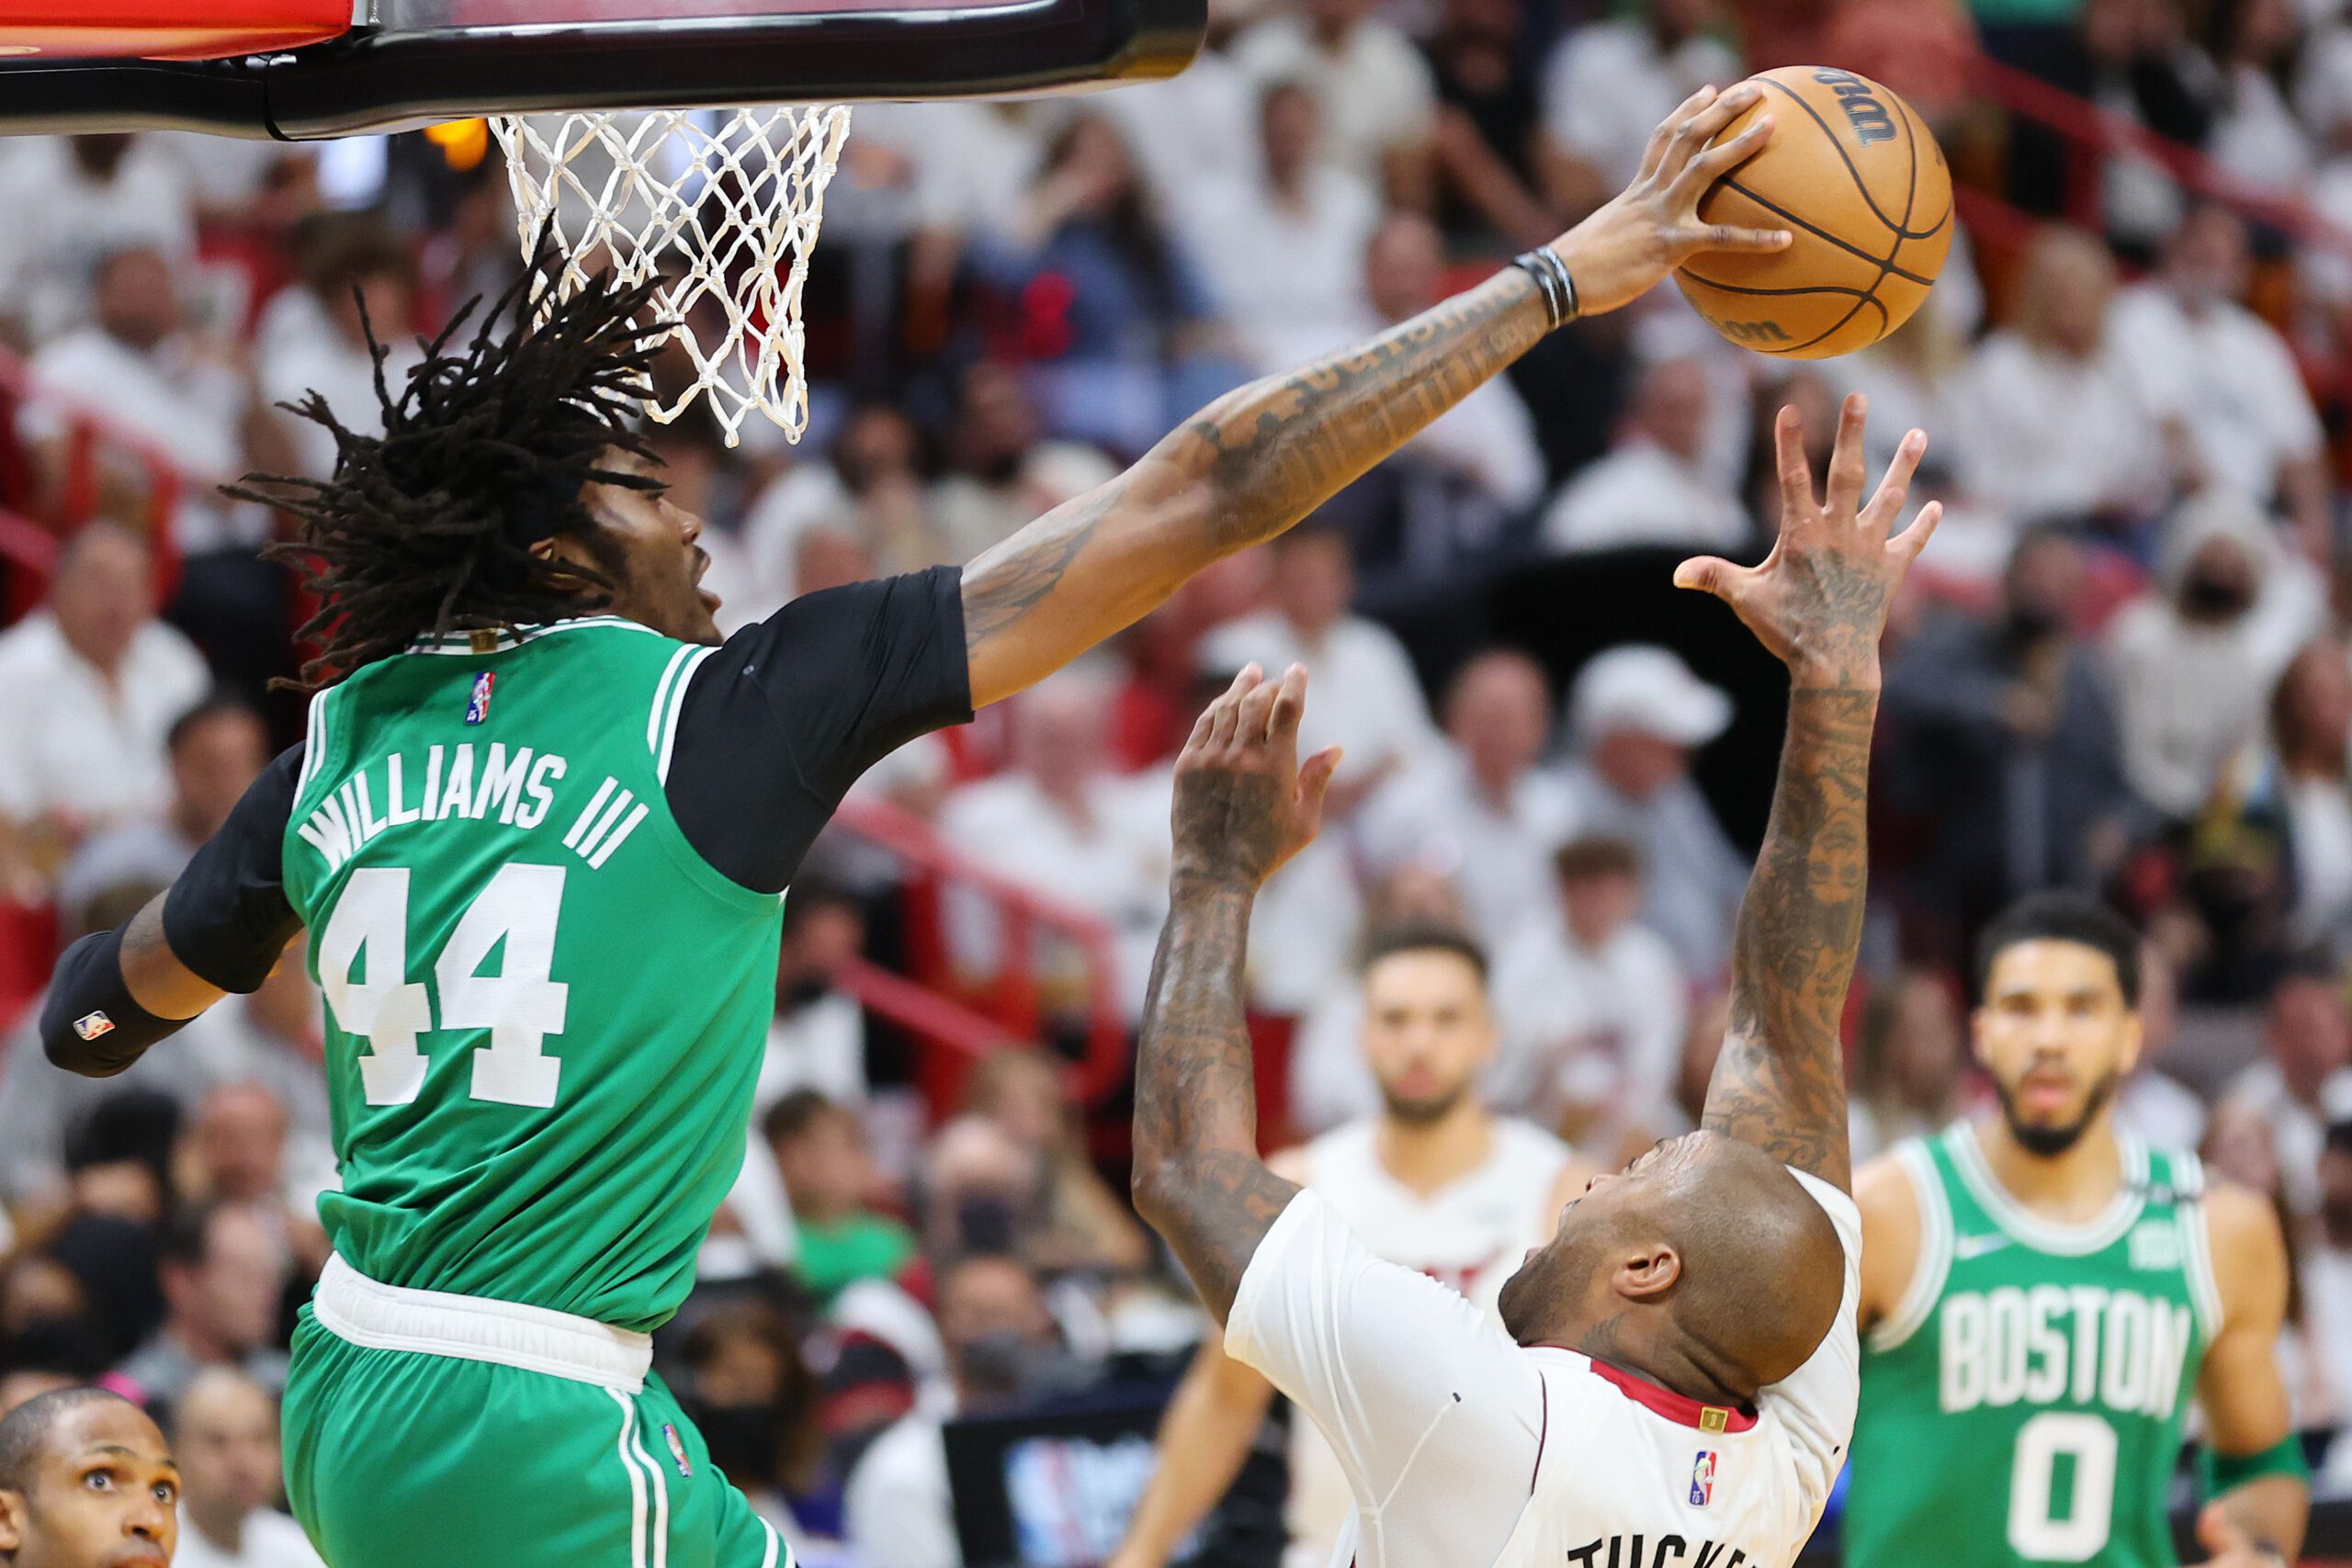 Boston Celtics: Robert Williams finally doing something good